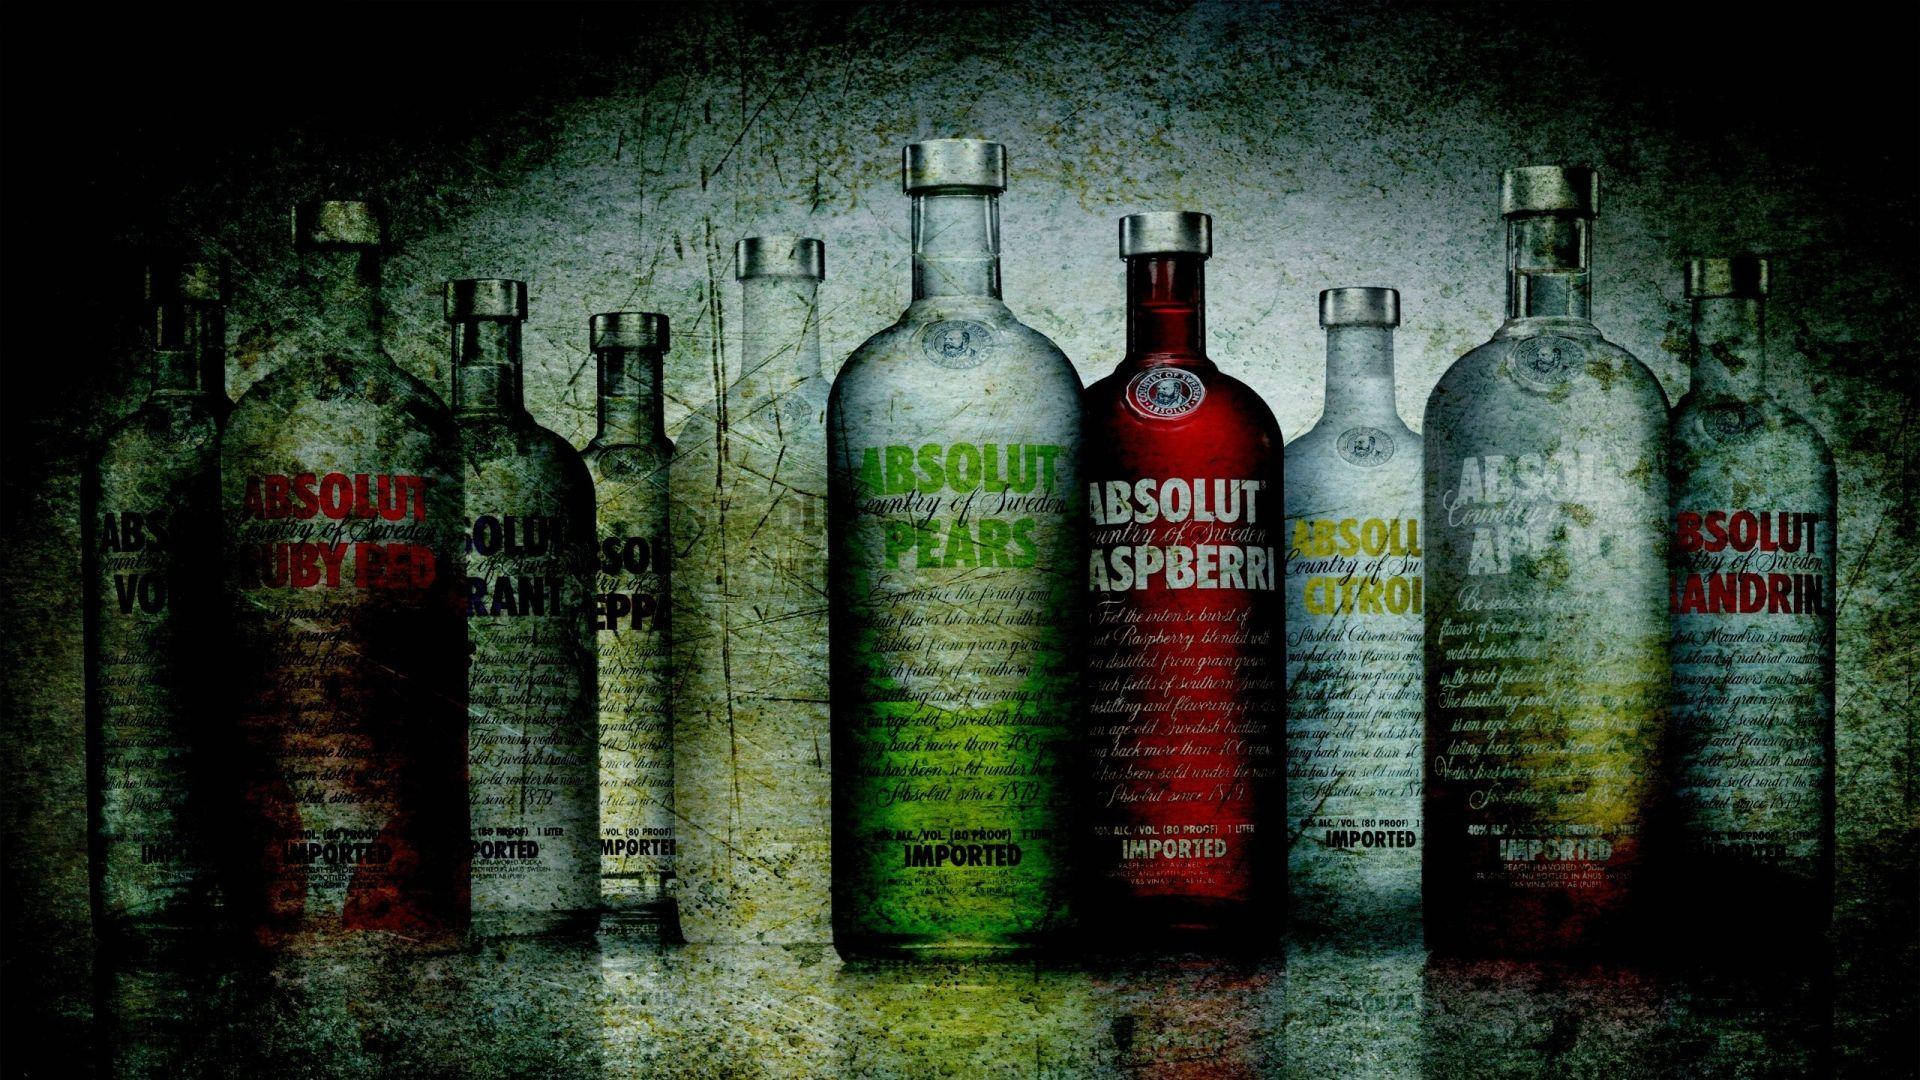 1920x1080 Full Hd Absolut Bottles Background